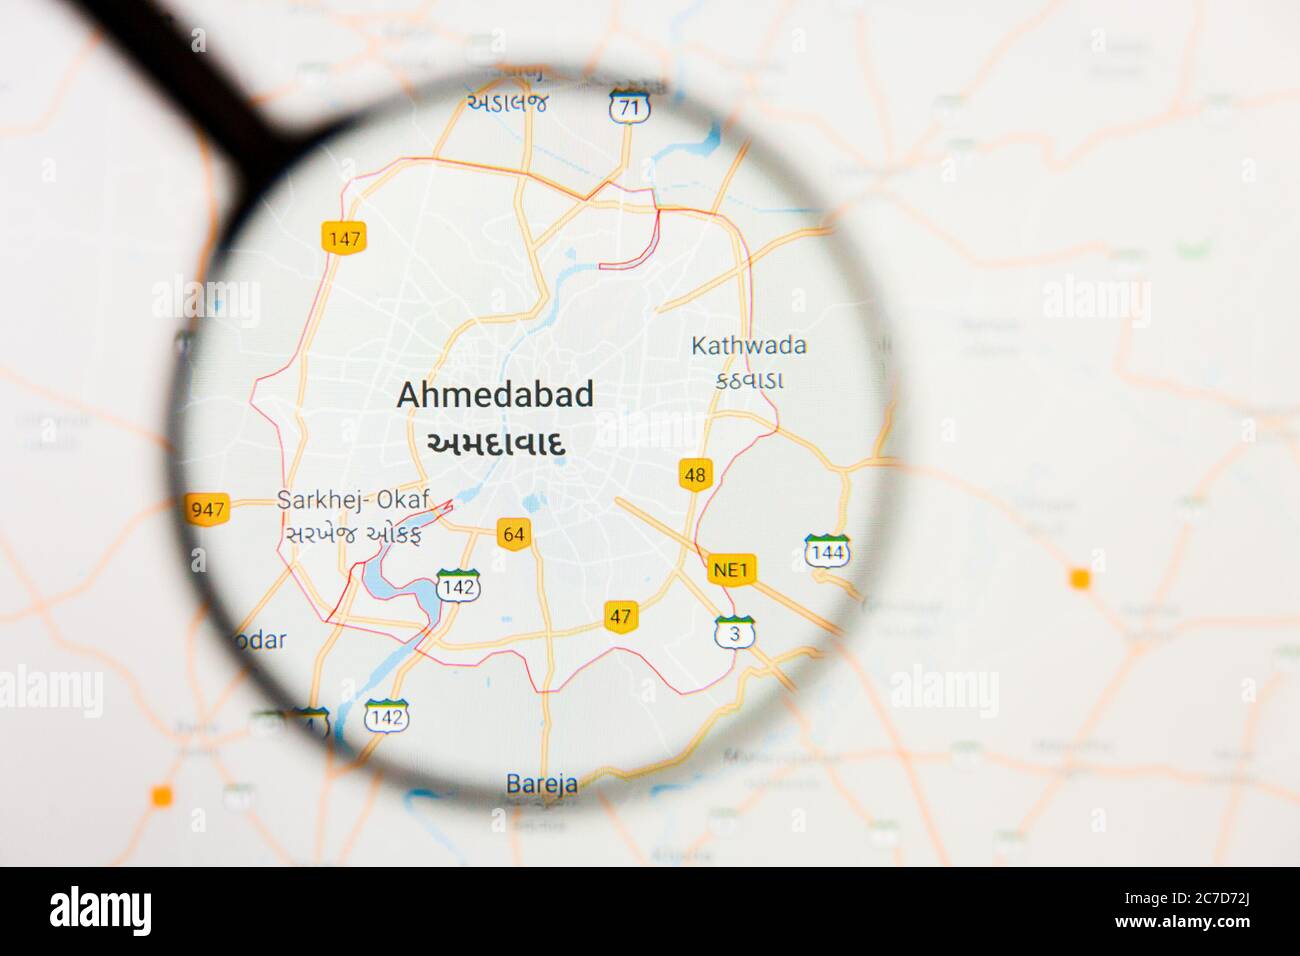 City Traffic Police finds more than 10 accident zones in Ahmedabad, devises  action plan to prevent accidents with help of Google Map | સ્માર્ટ પ્લાન:  અમદાવાદના 15 એક્સિડેન્ટ ઝોનને શહેર ટ્રાફિક-પોલીસે ...